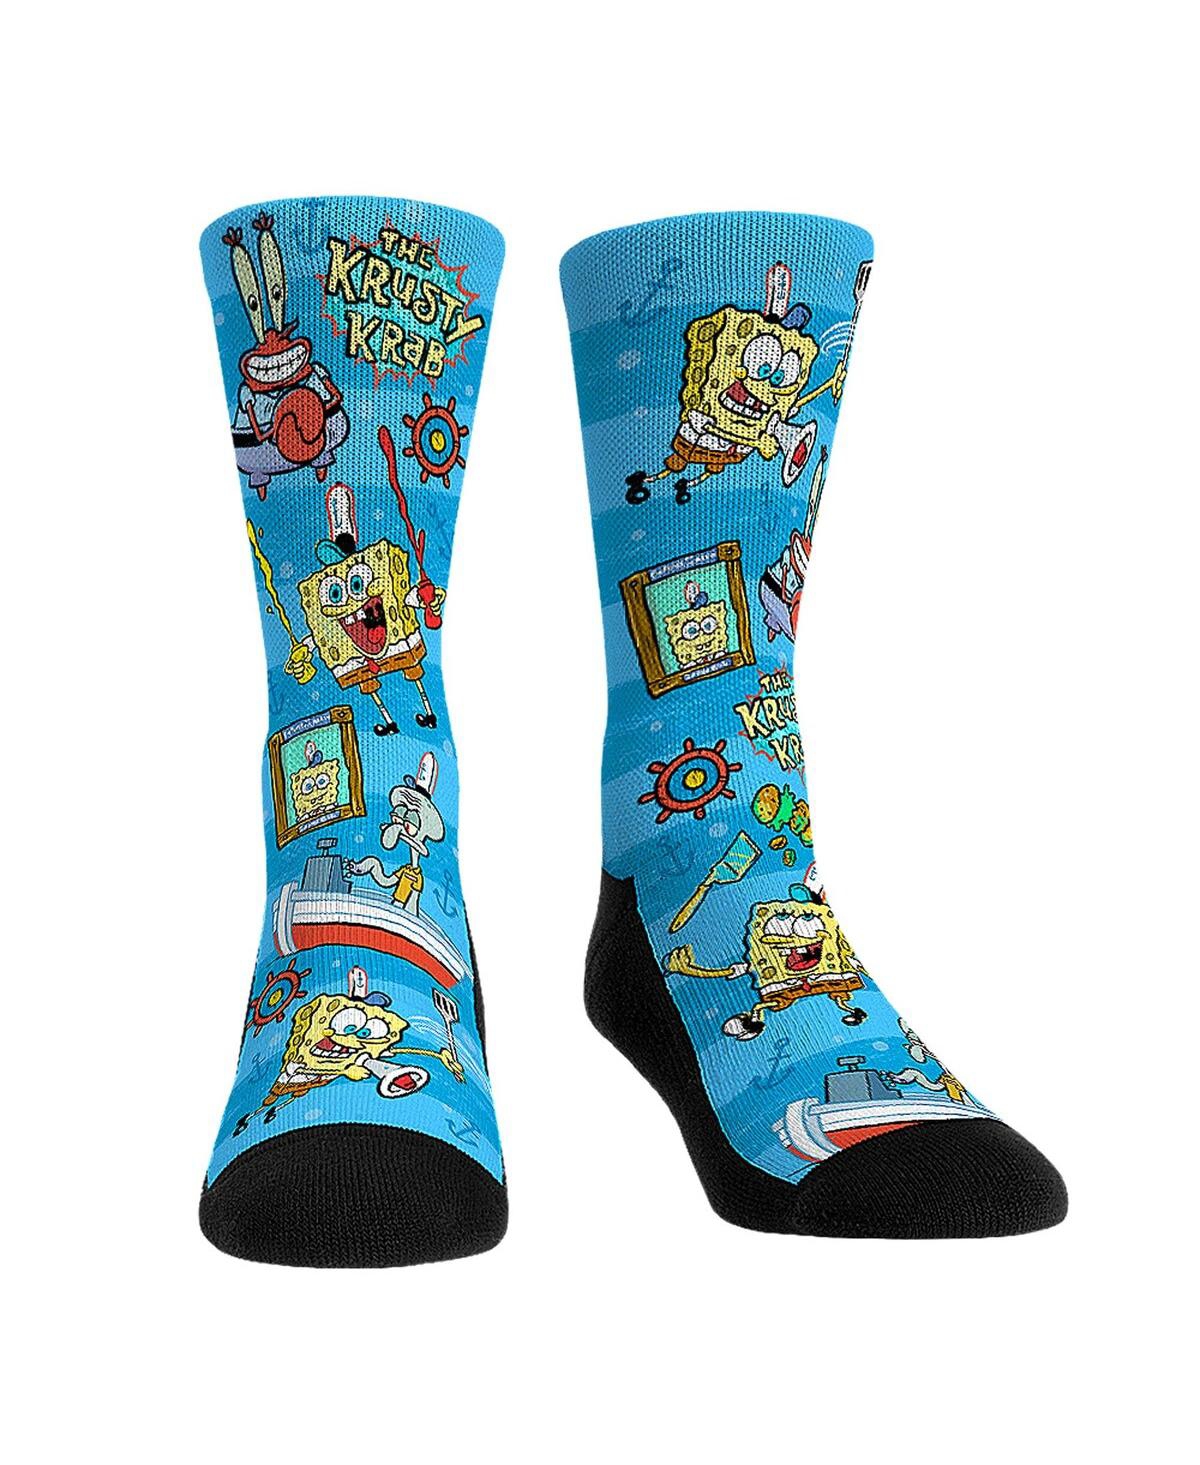 Men's and Women's Rock 'Em Socks SpongeBob SquarePants Krusty Krab Ko-Workers Crew Socks - Multi